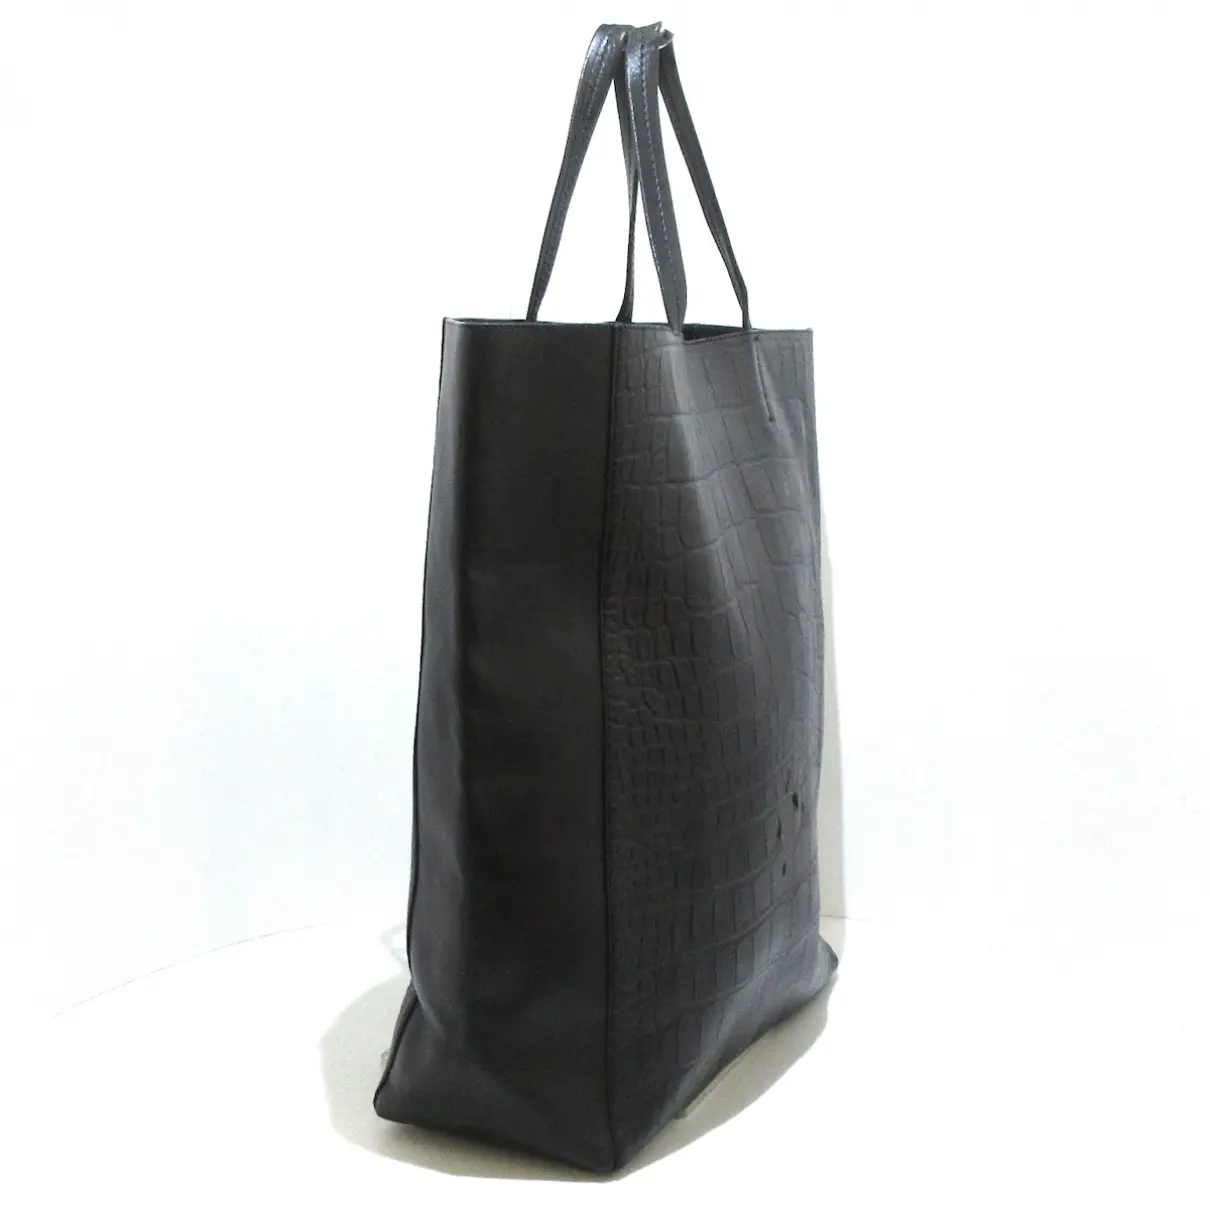 Buy Celine Cabas Vertical leather tote online